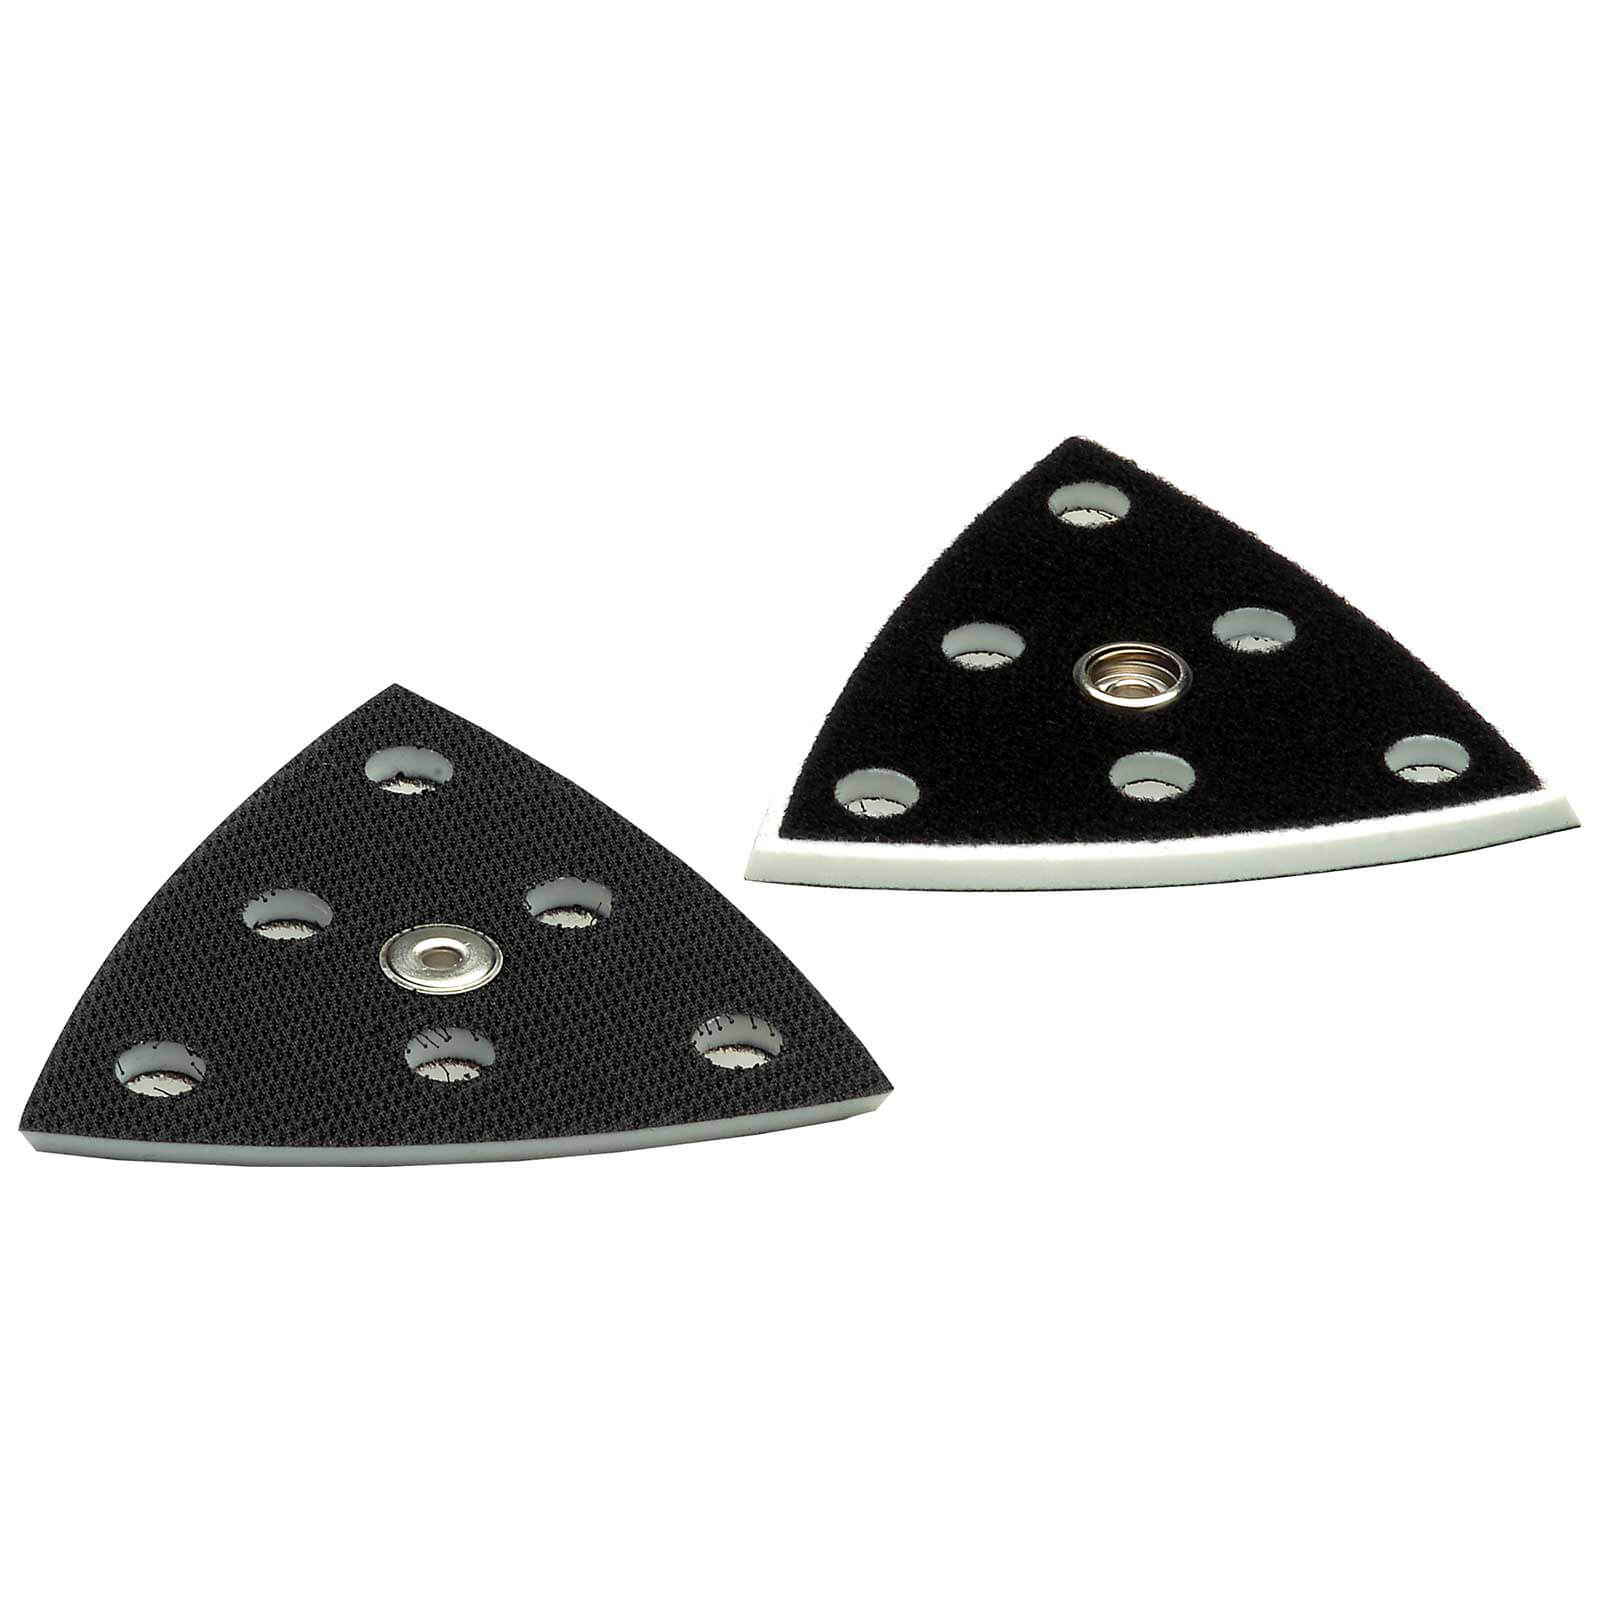 Photos - Abrasive Wheel / Belt Festool Hard Delta Sanding Pads for DX 93 and RO 90 DX Pack of 2 488716 